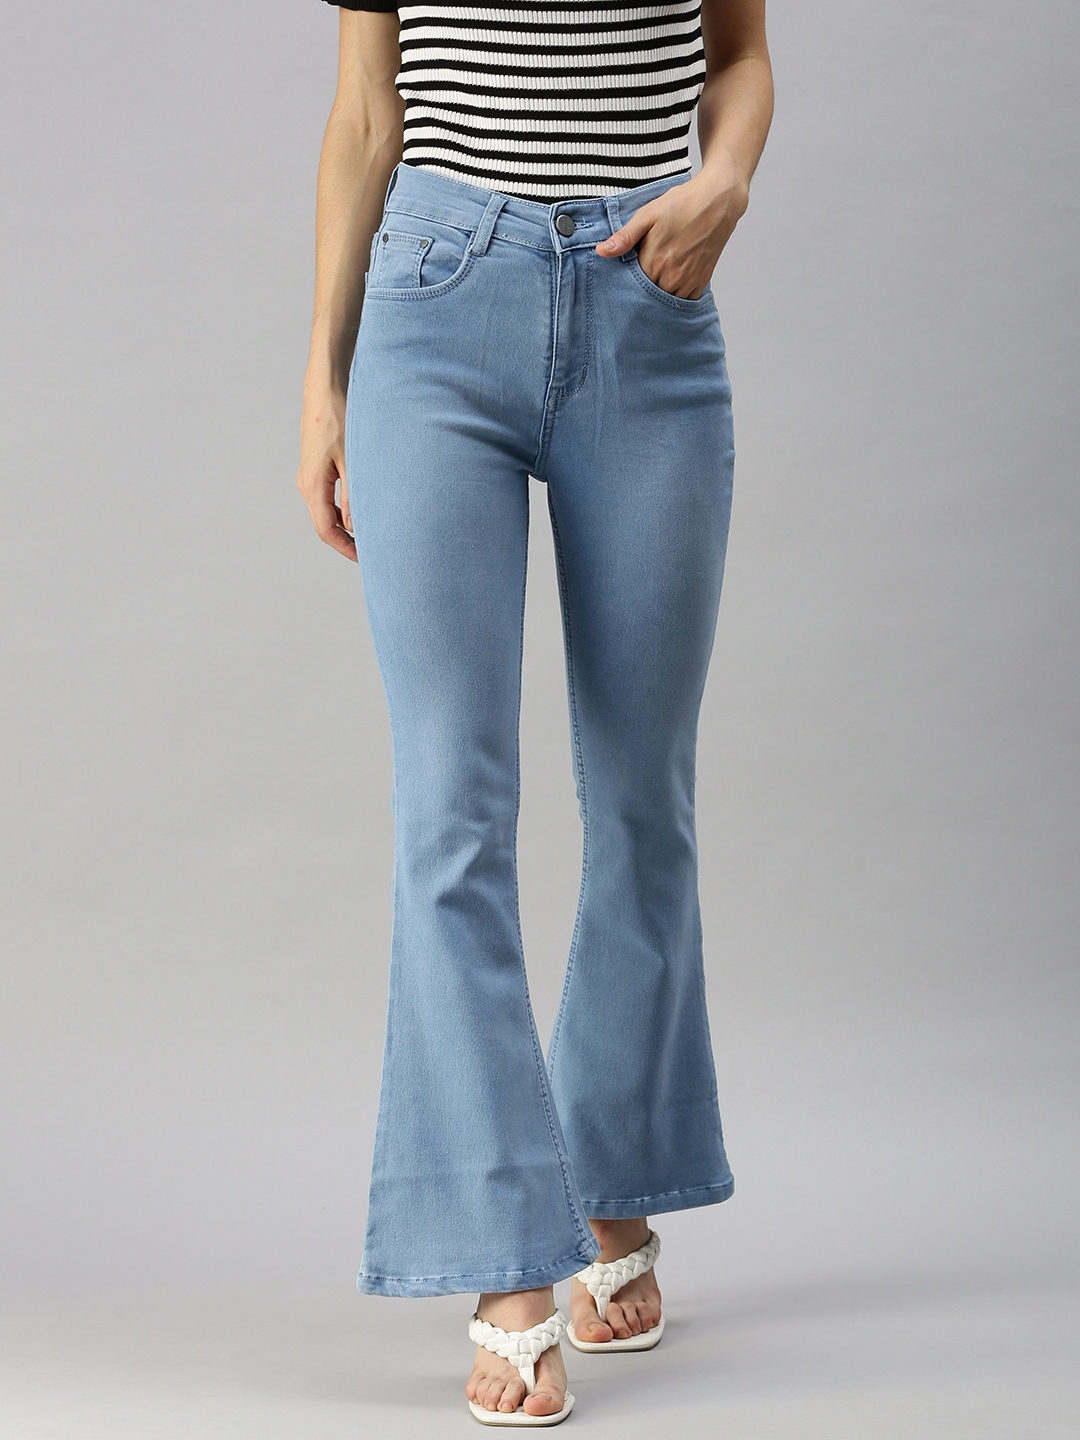 SHOWOFF Women's Clean Look Blue Straight Fit Denim Jeans